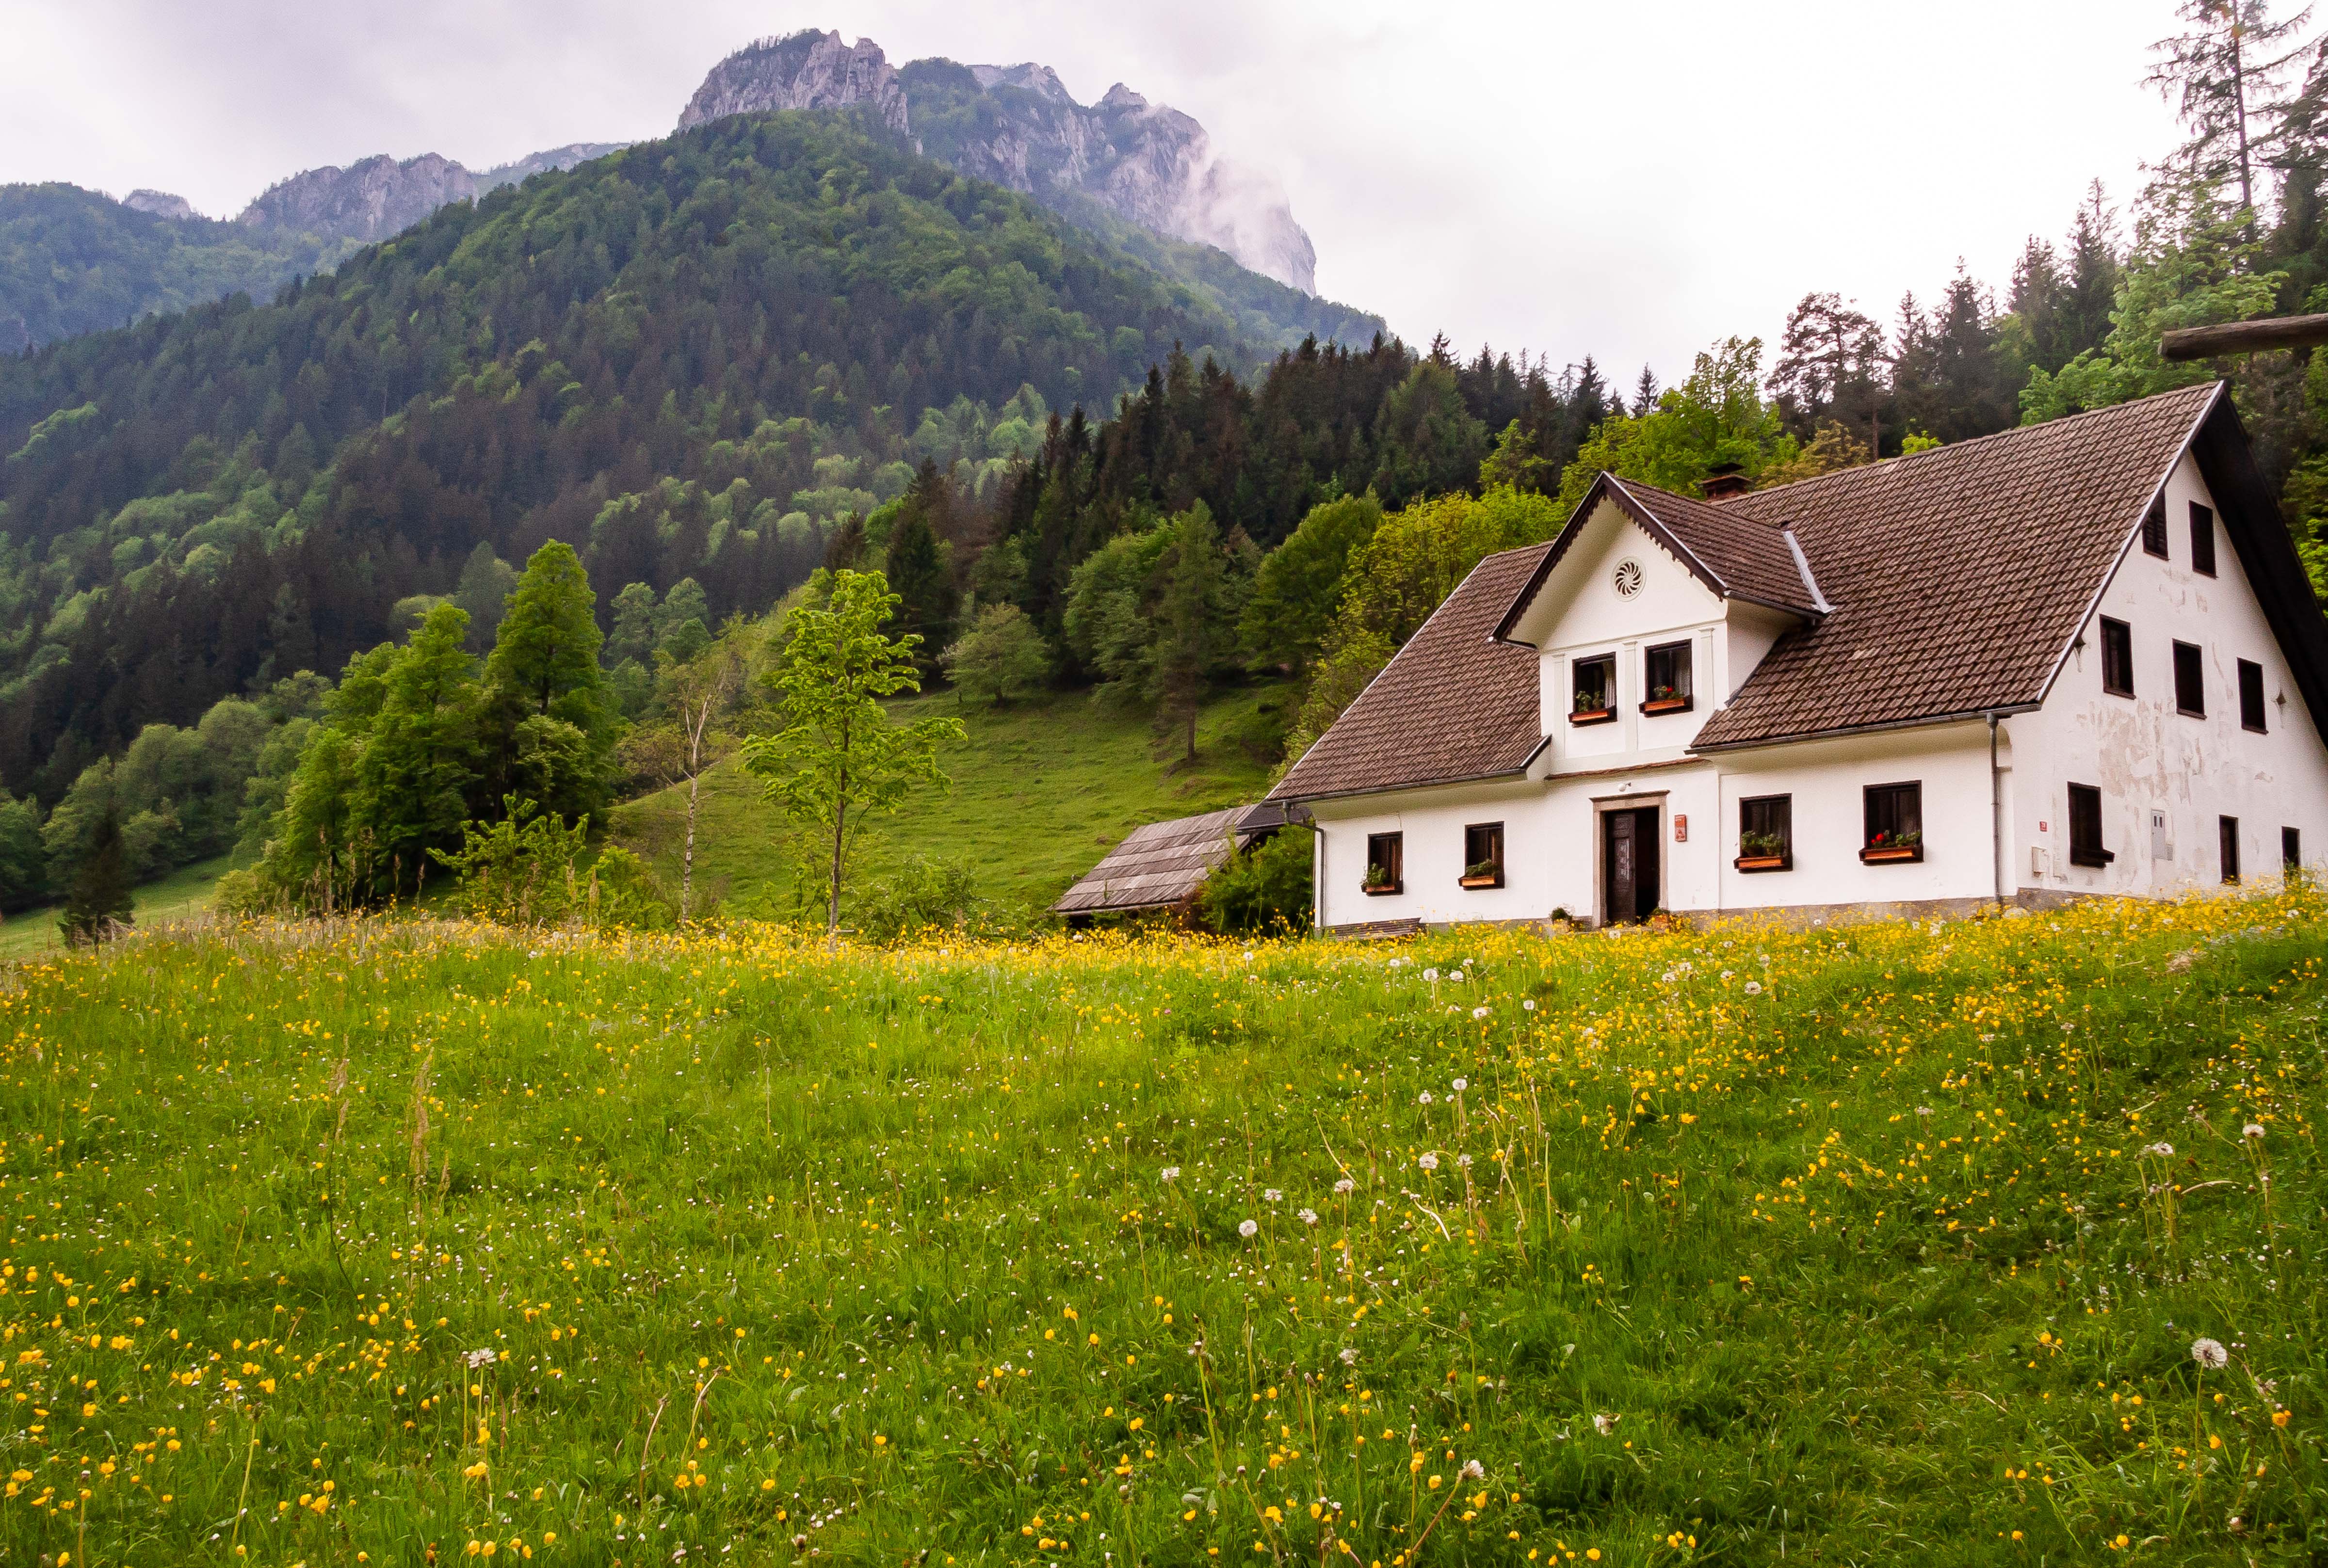 Slovenia, Solcava Prov, House And Mountain, 2006, IMG 8384